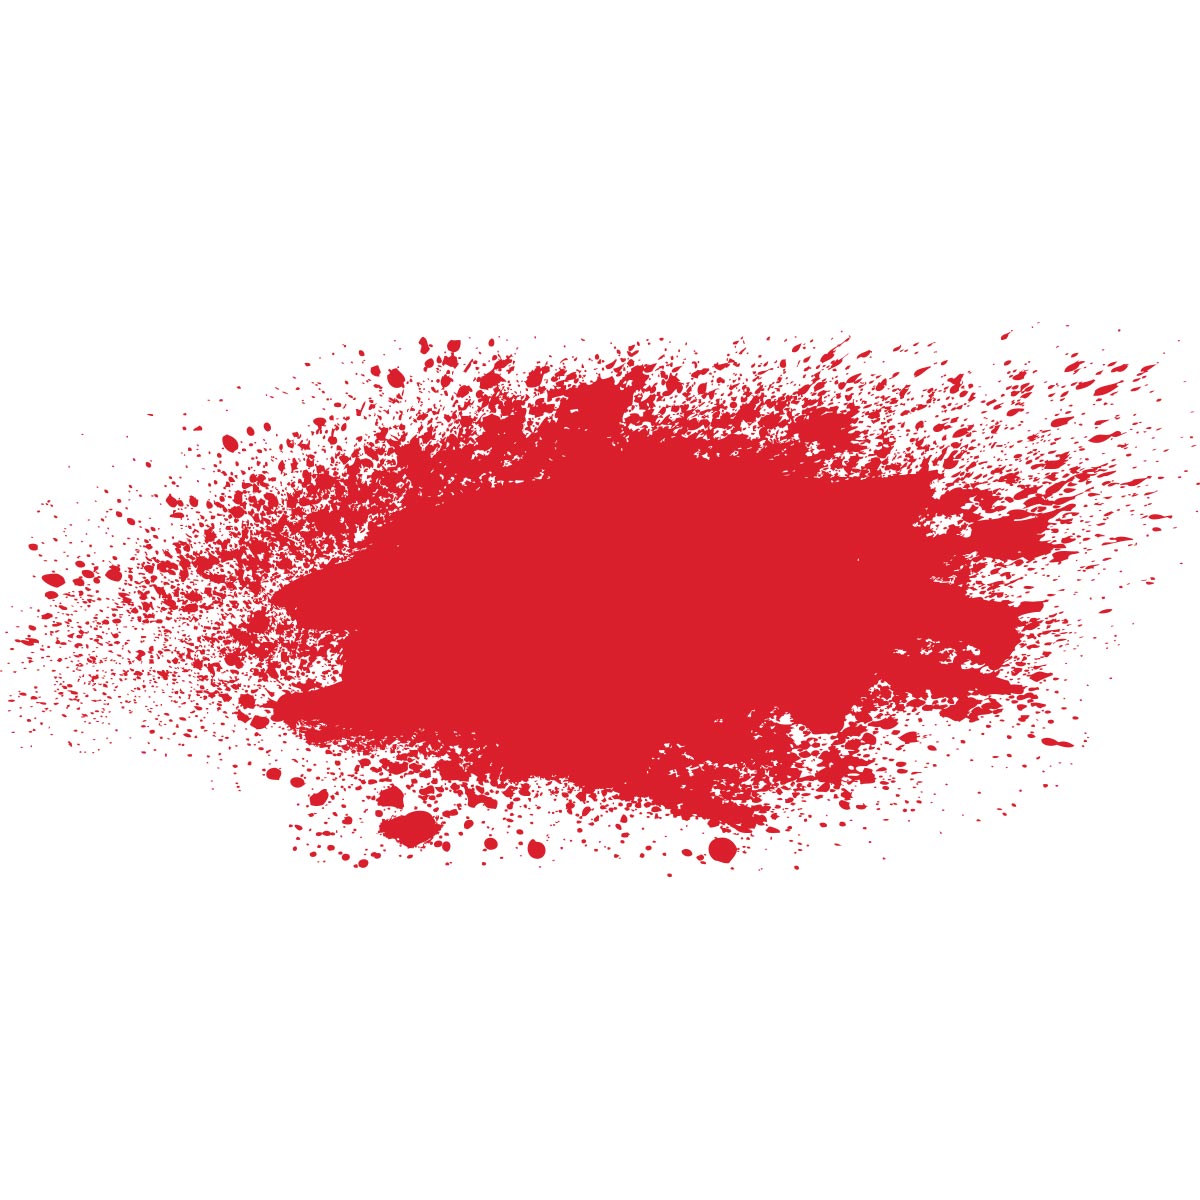 FolkArt ® Stencil Spray™ Acrylic Paint - Bright Red, 2 oz. - 6186